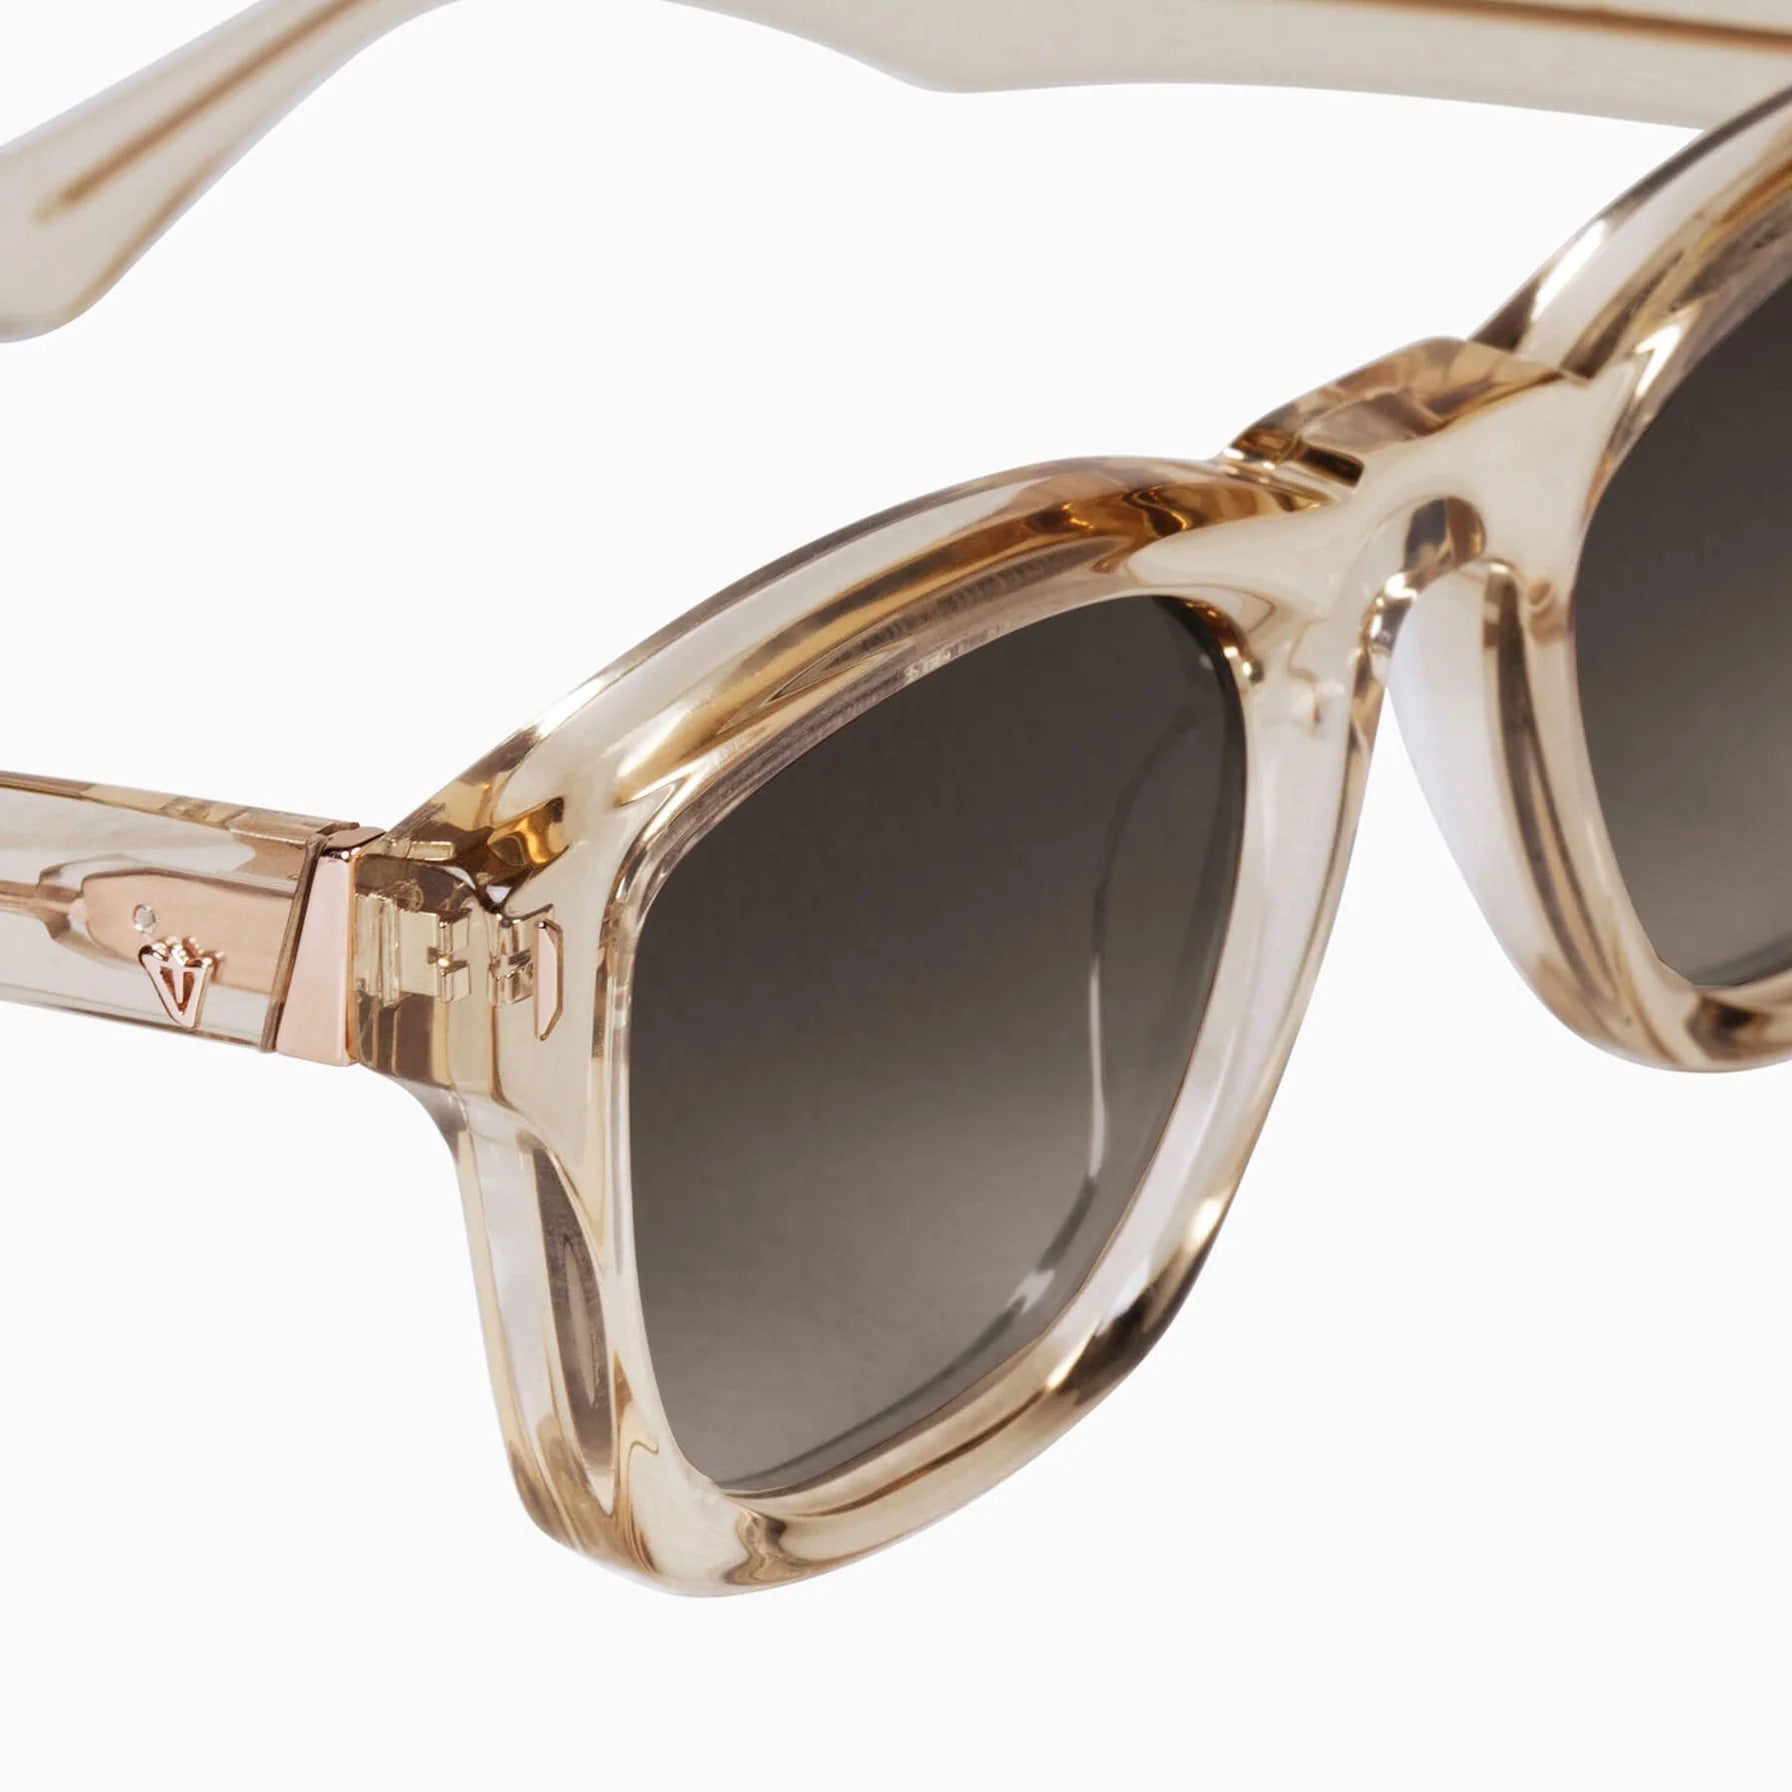 Solomon | Sunglasses - Champagne w. Rose Gold Metal Trim / Brown Gradient Lens